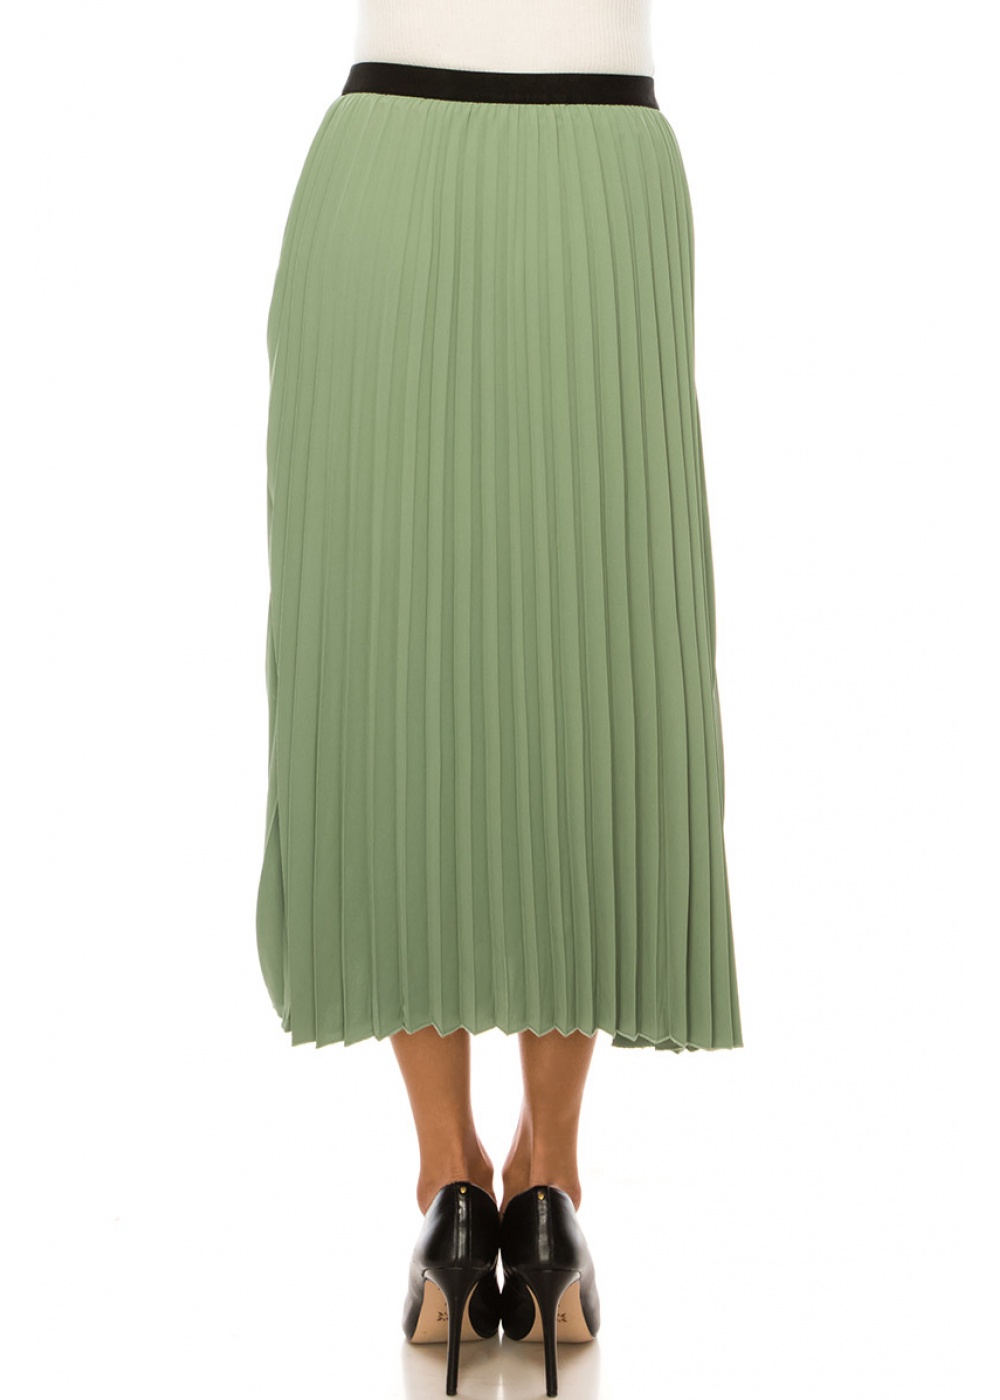 Classic Pleated Mint Skirt